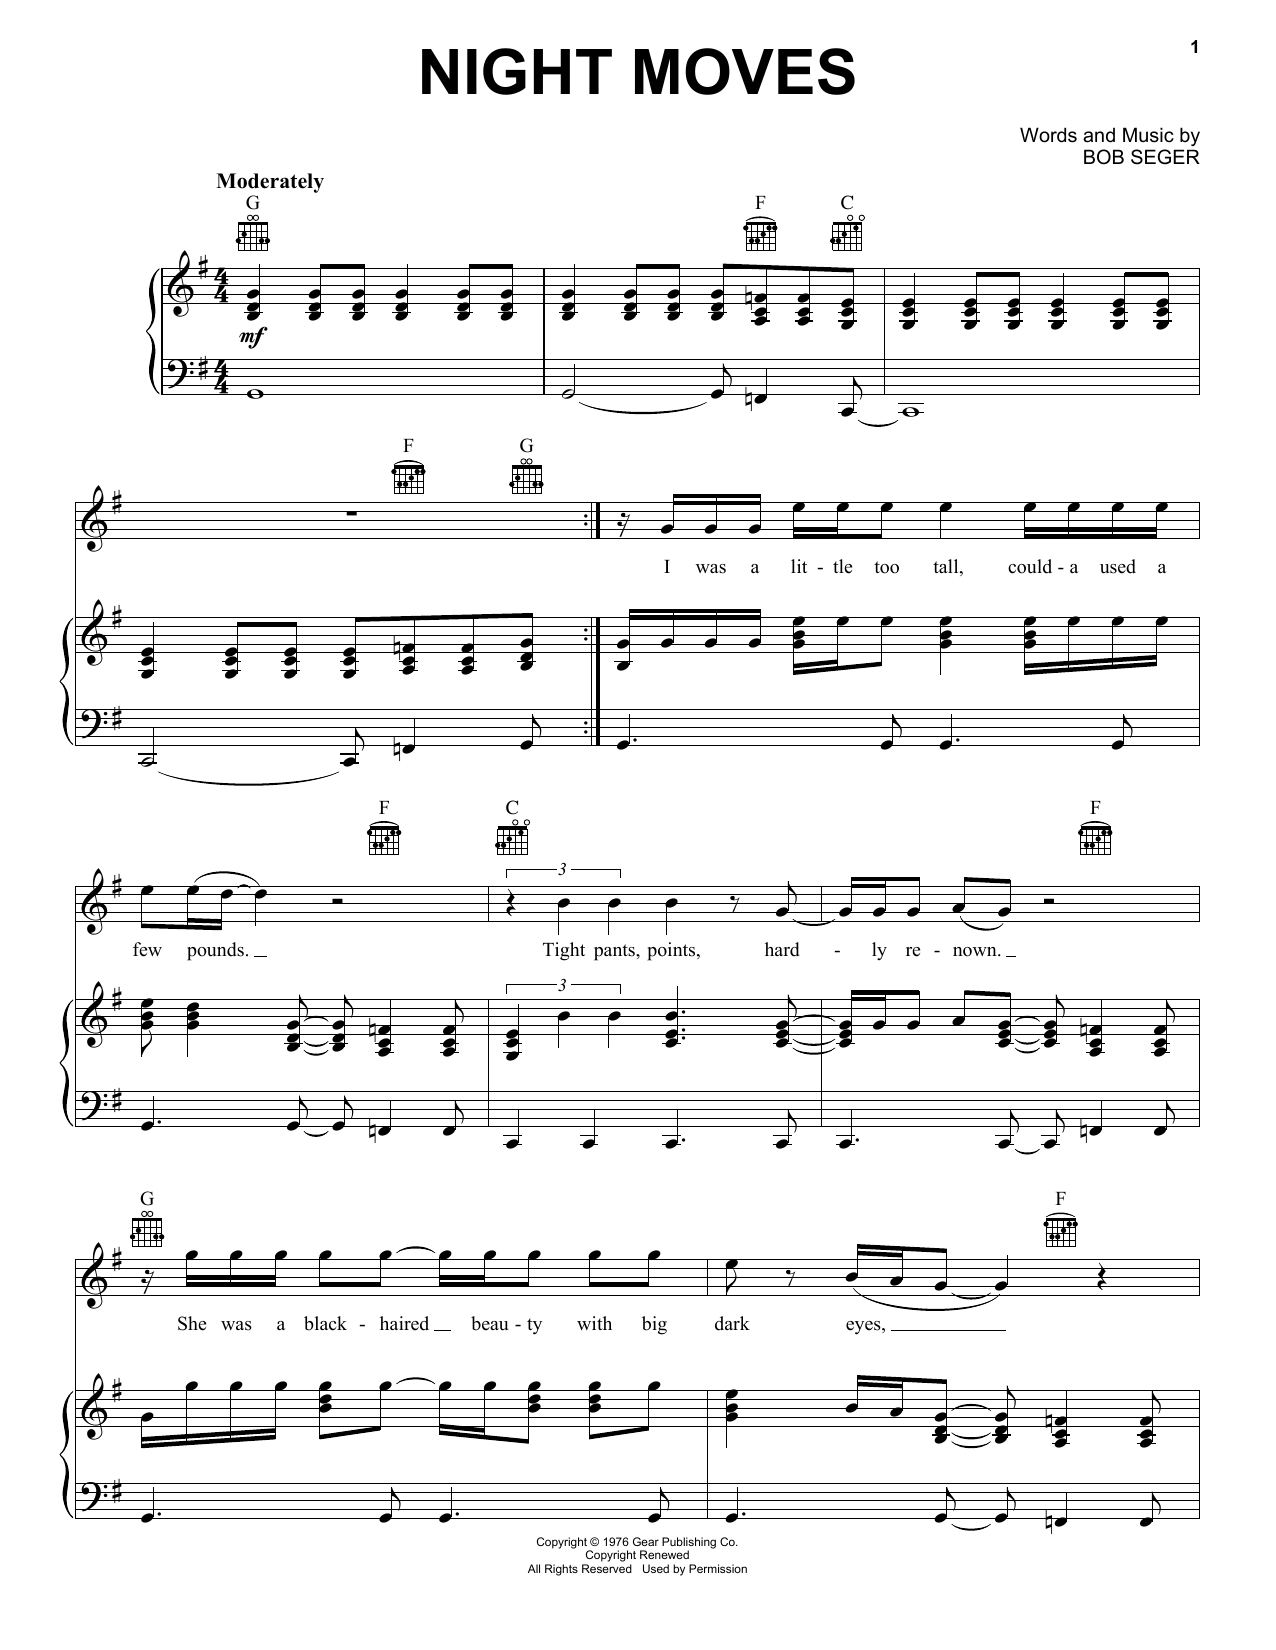 Bob Seger Night Moves sheet music notes and chords. Download Printable PDF.